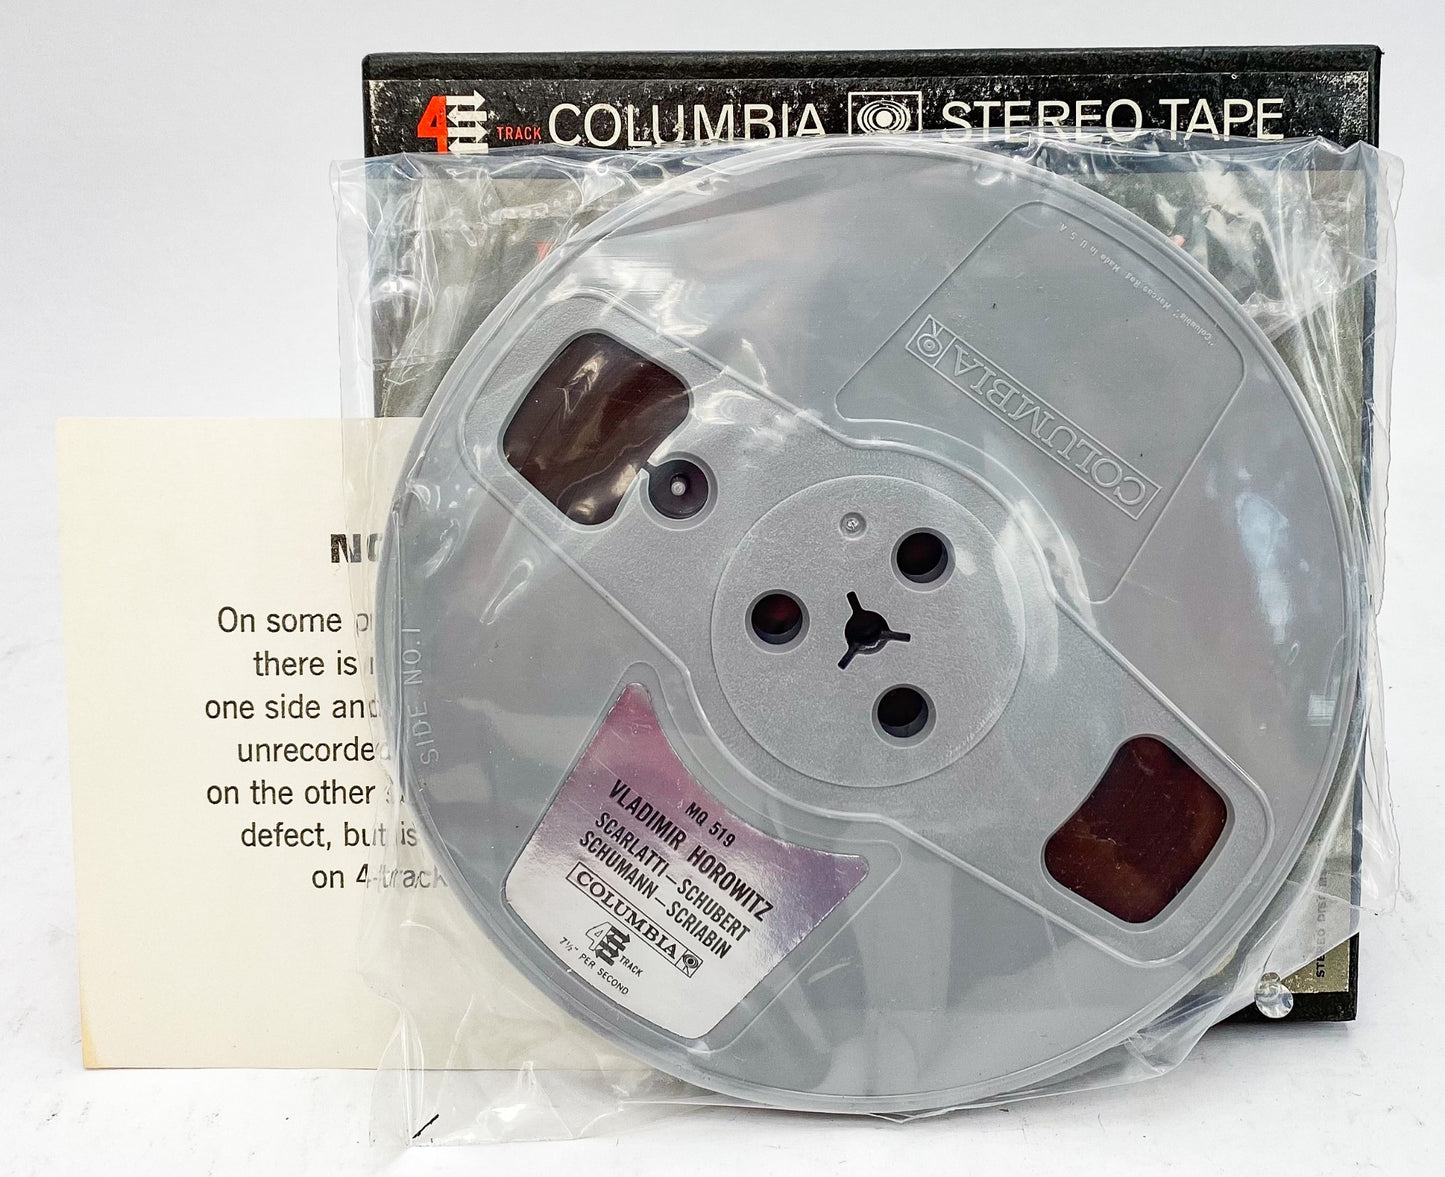 The Sound Of Horowitz Vladimir Horowitz Reel to Reel Tape 7 1/2 IPS Columbia